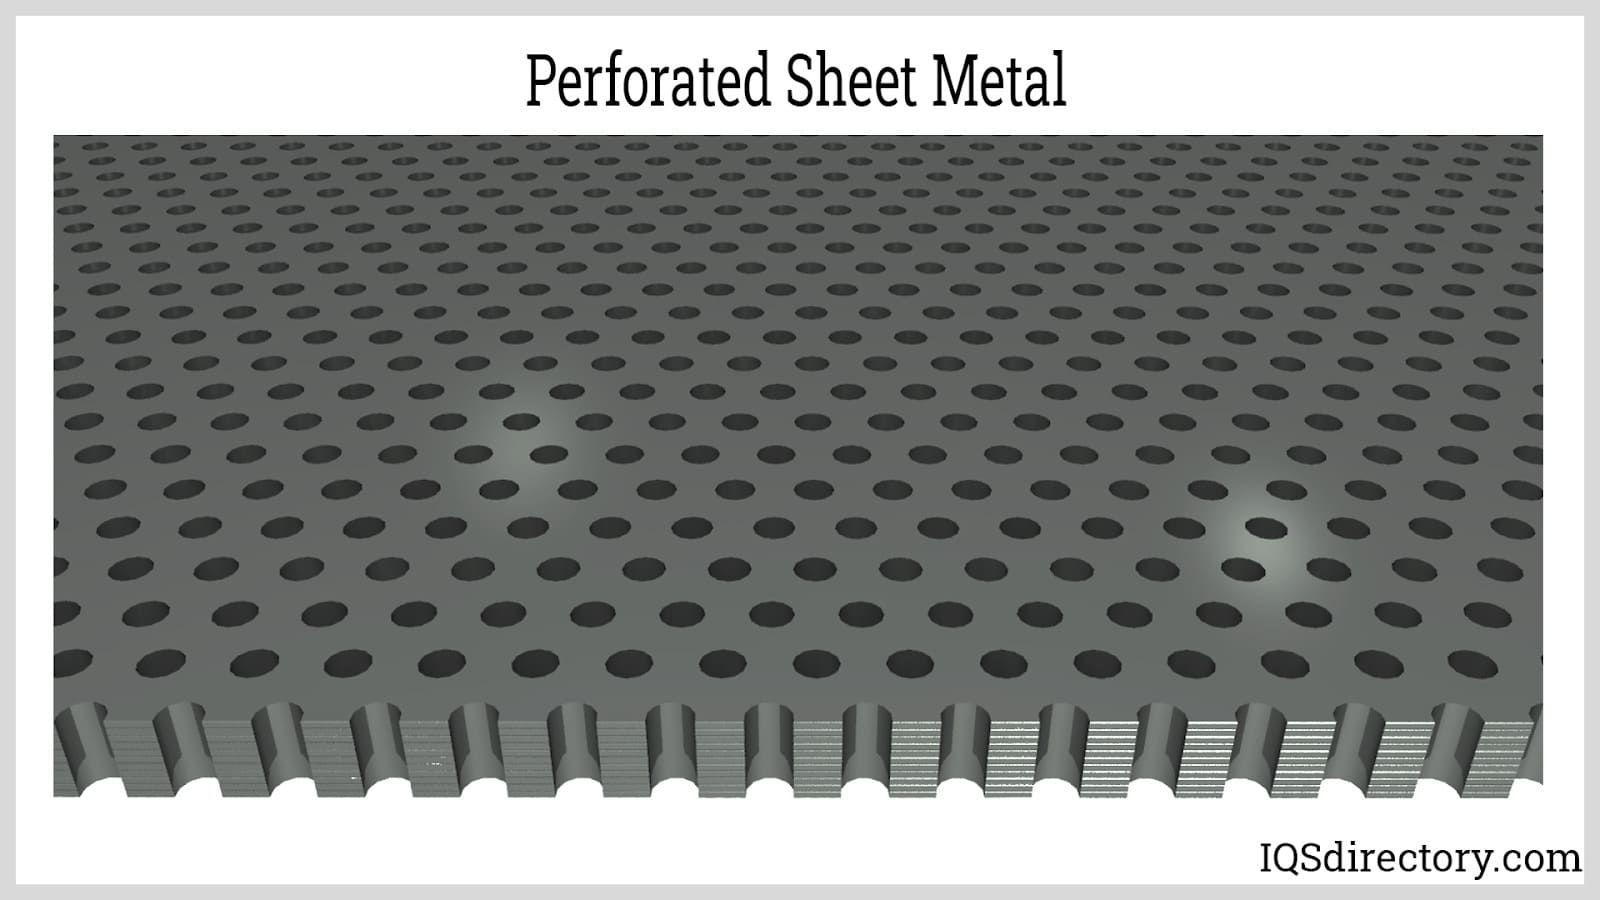 Perforated Sheet Metal